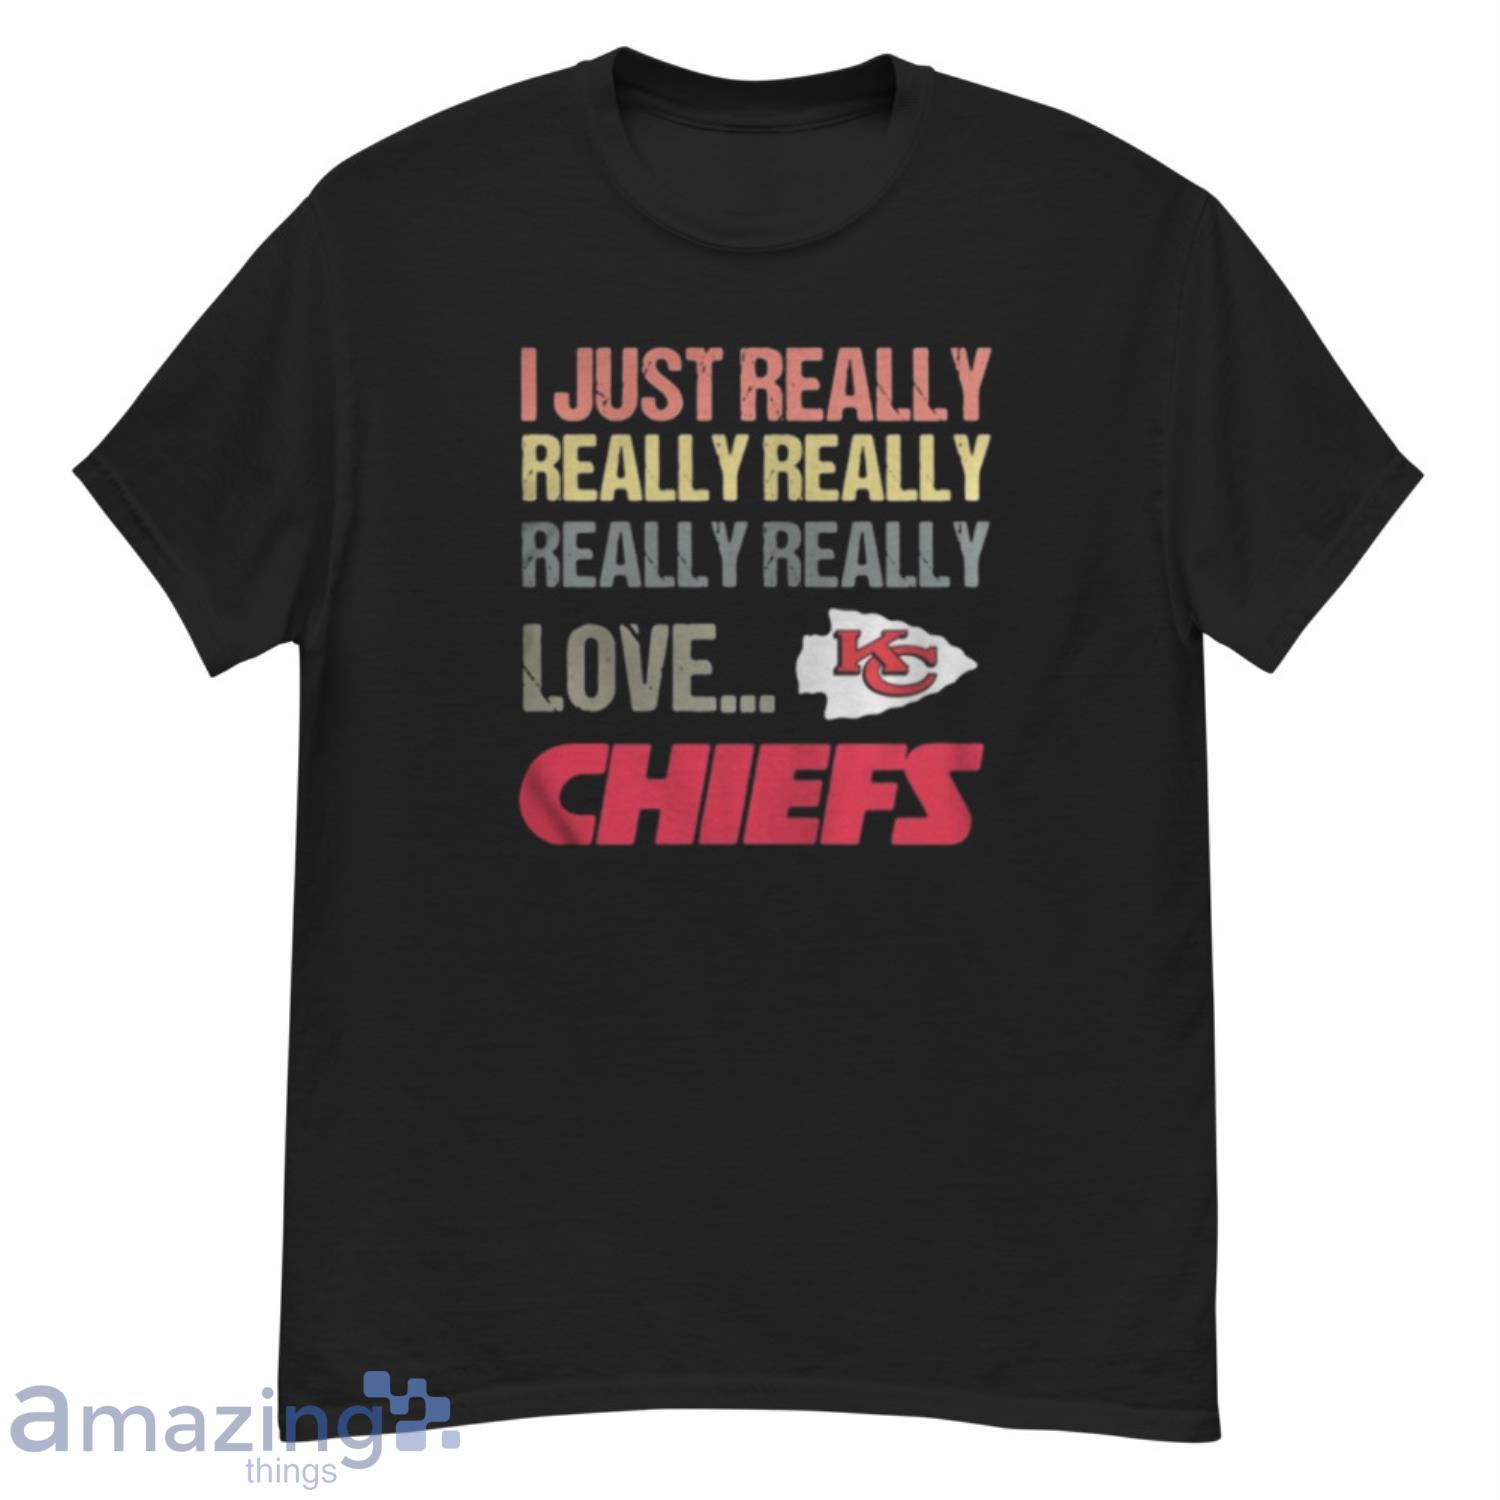 I just really really really really really love Kansas City Chiefs shirt - G500 Men’s Classic T-Shirt